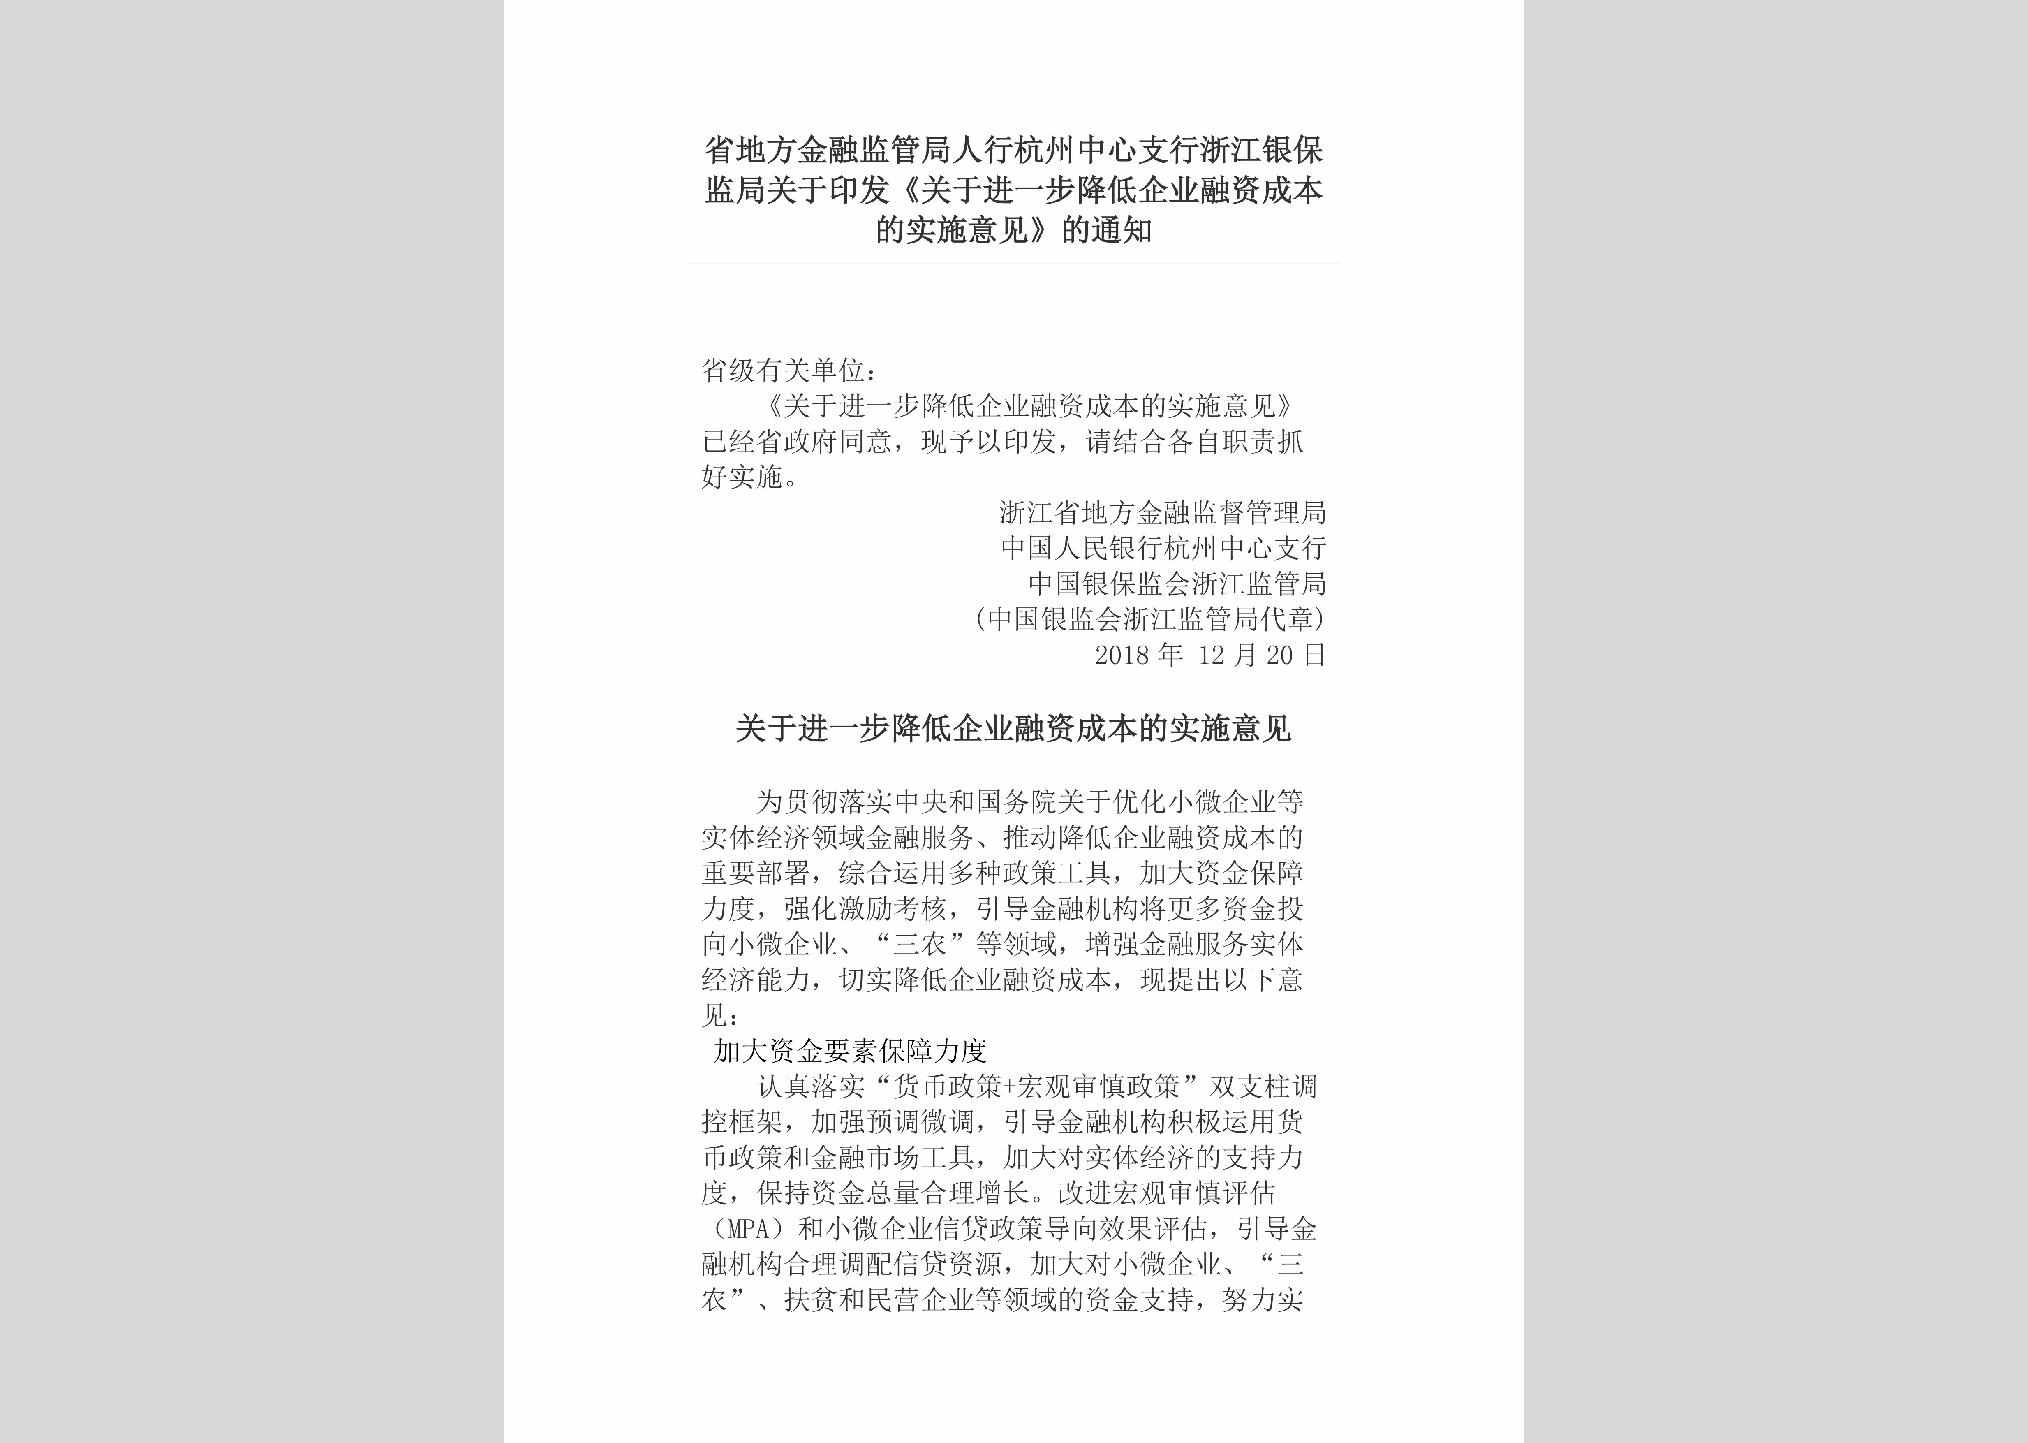 ZJ-JDQYRZCB-2018：省地方金融监管局人行杭州中心支行浙江银保监局关于印发《关于进一步降低企业融资成本的实施意见》的通知